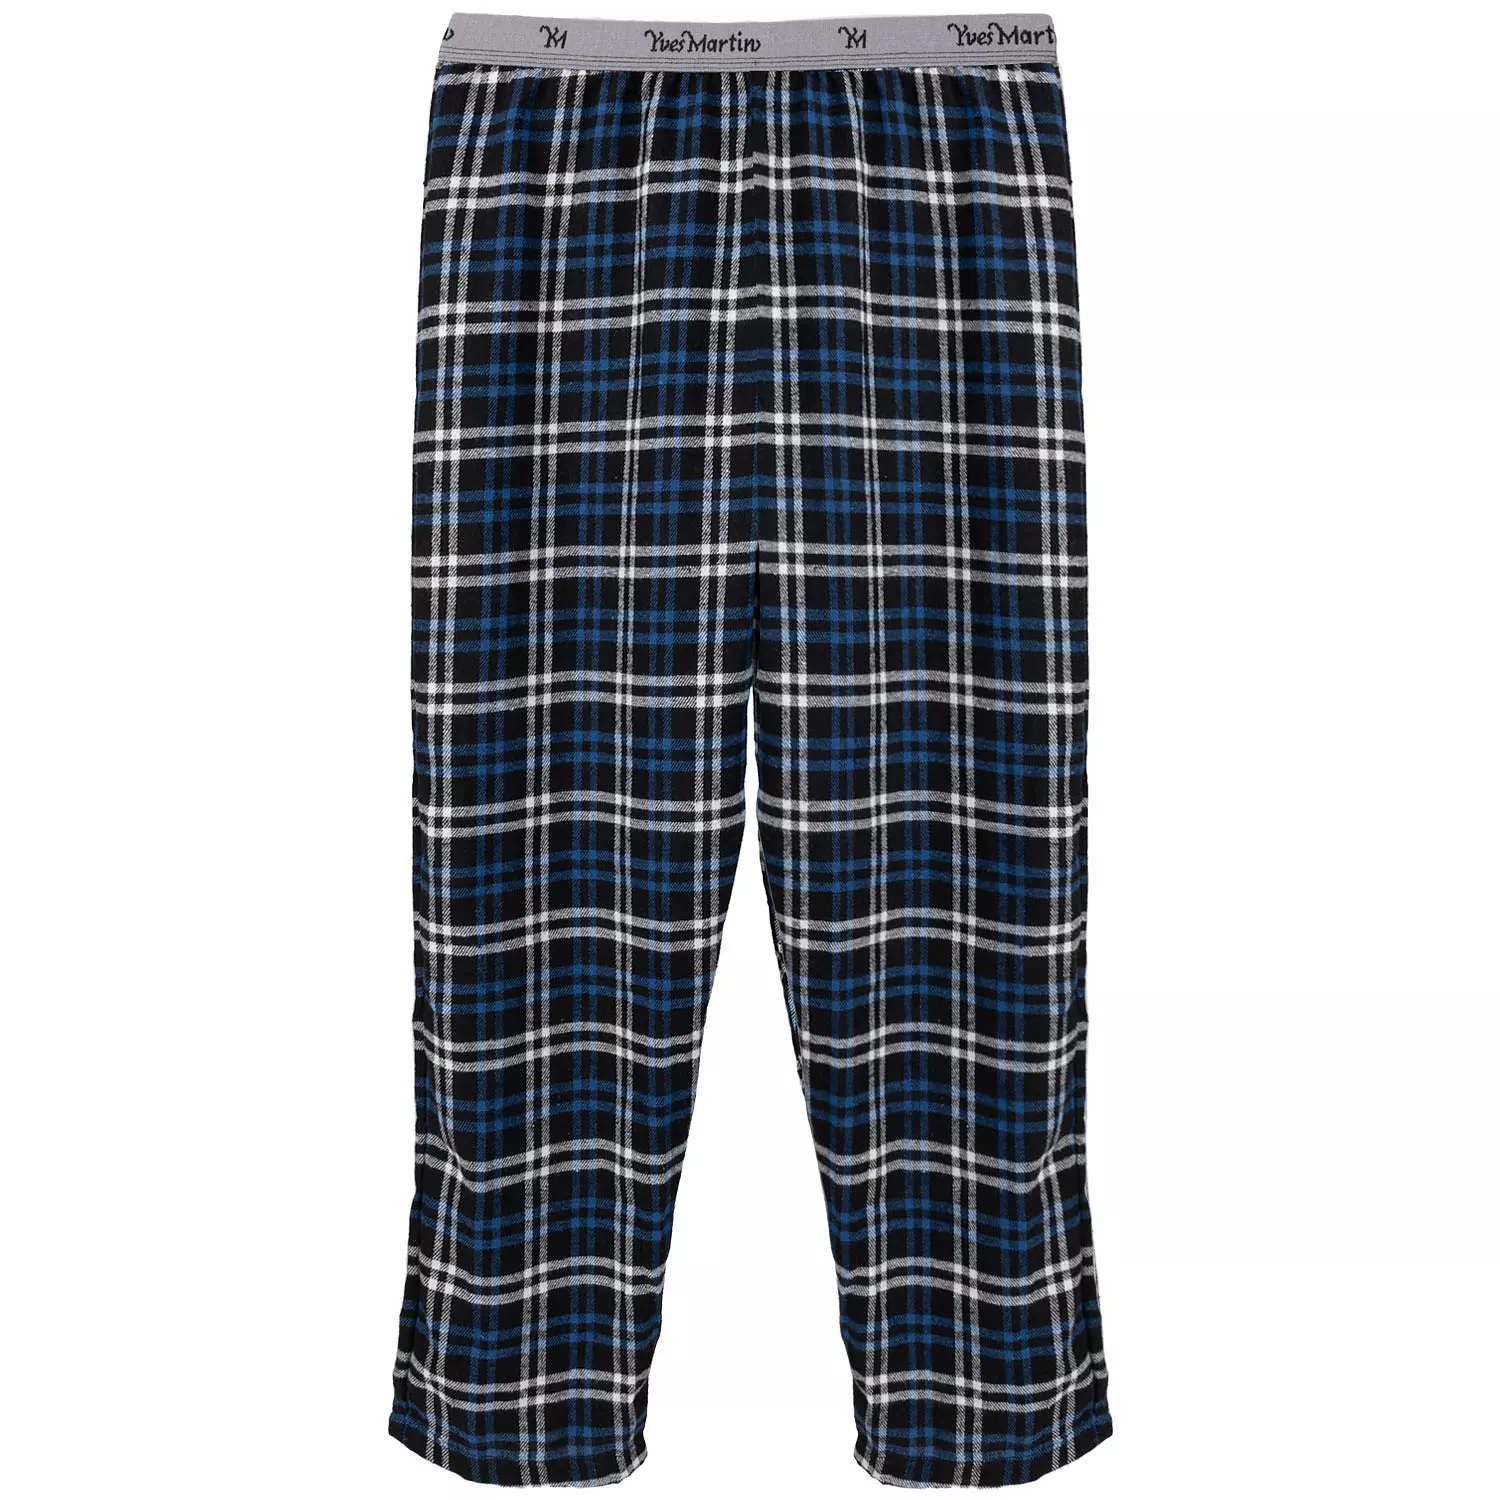 Yves Martin - Pantalon de pyjama en flanelle à carreaux bleus, moyen (M)